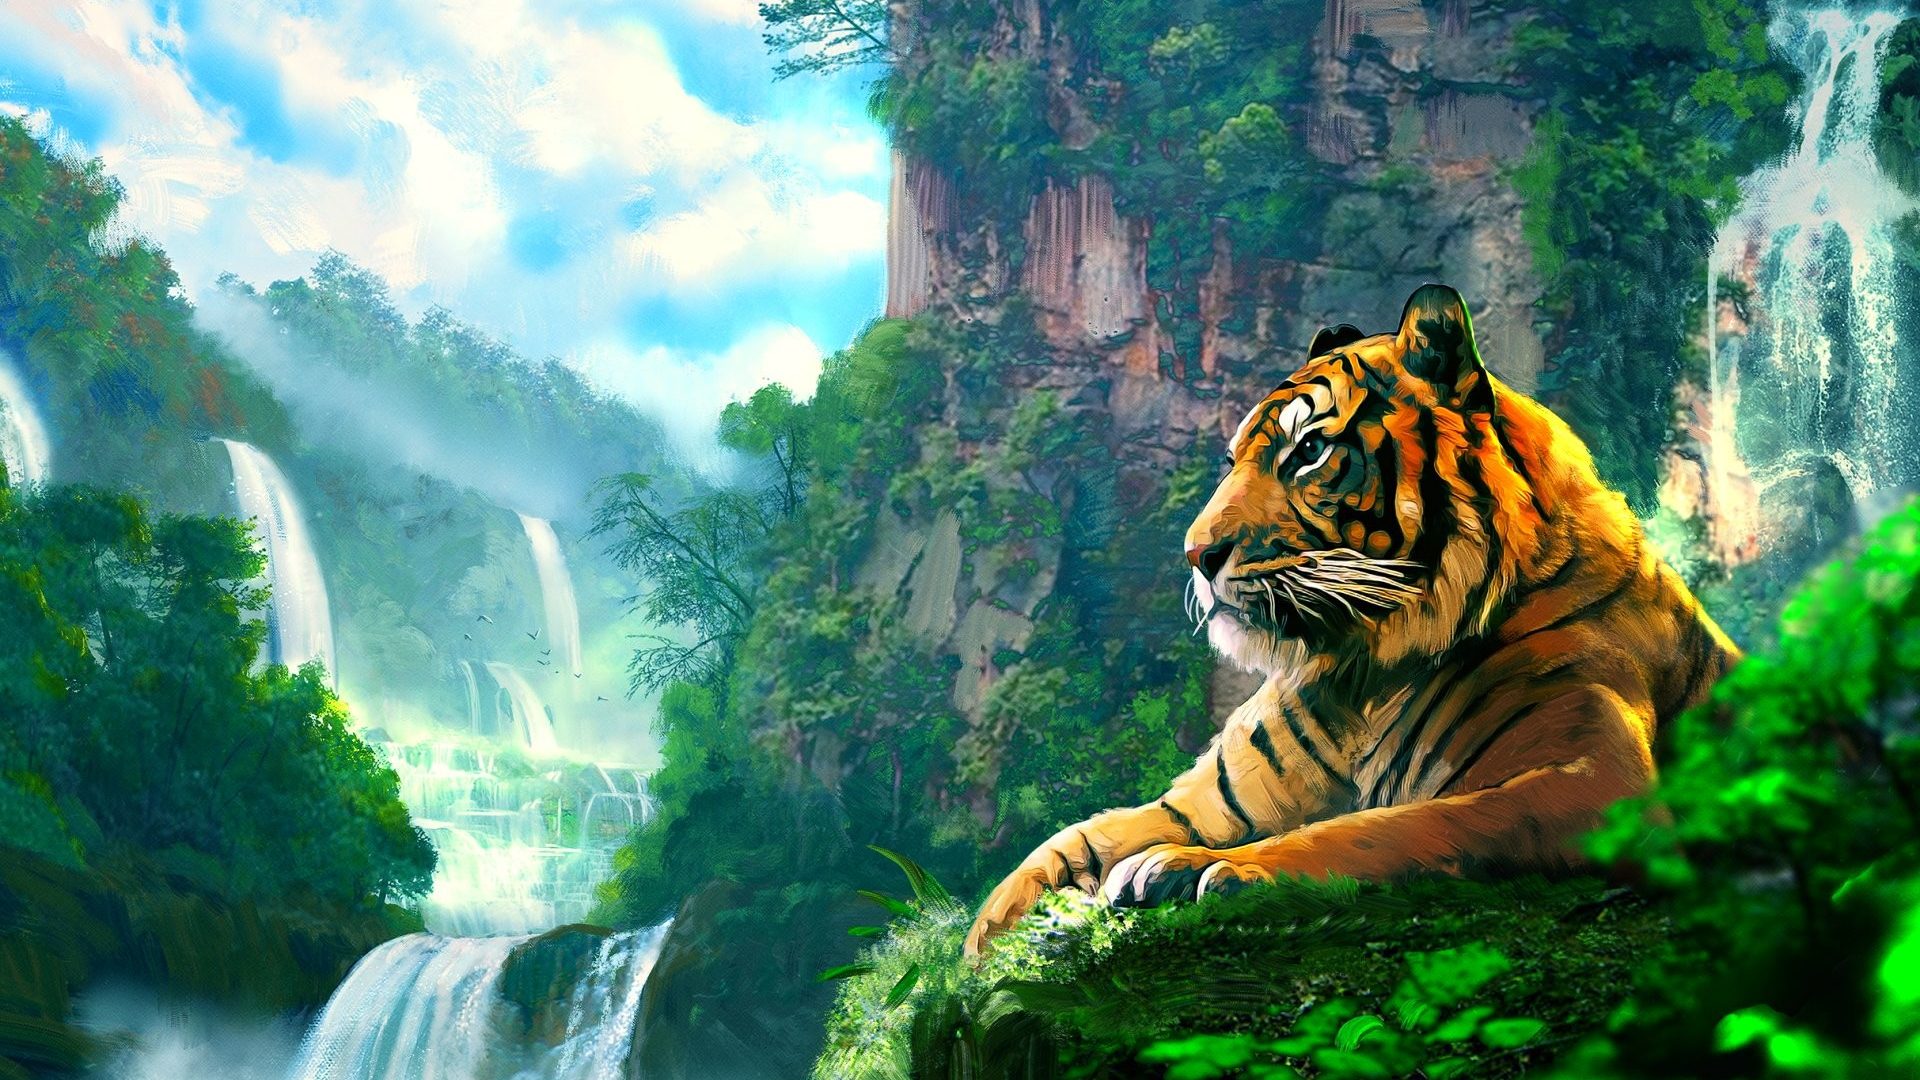 cats-cat-asian-oriental-predator-nature-fantasy-jungle-tiger-wallpaper-for-mobile-1920x1080